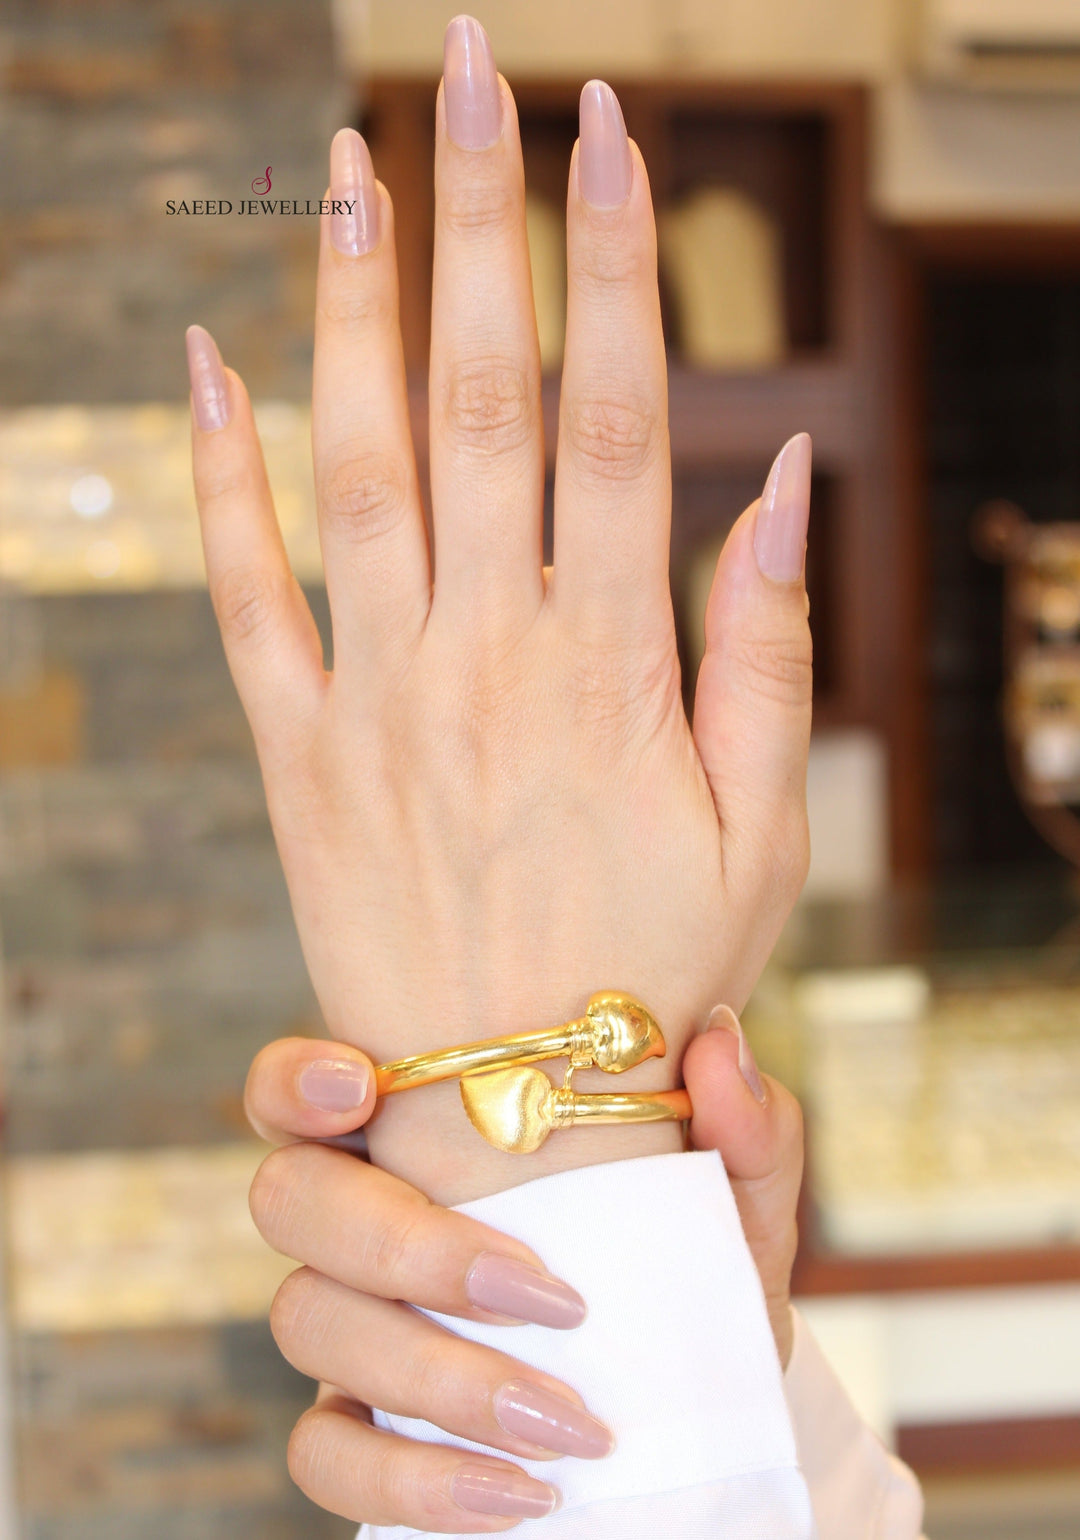 21K Gold Heart Bangle Bracelet by Saeed Jewelry - Image 3